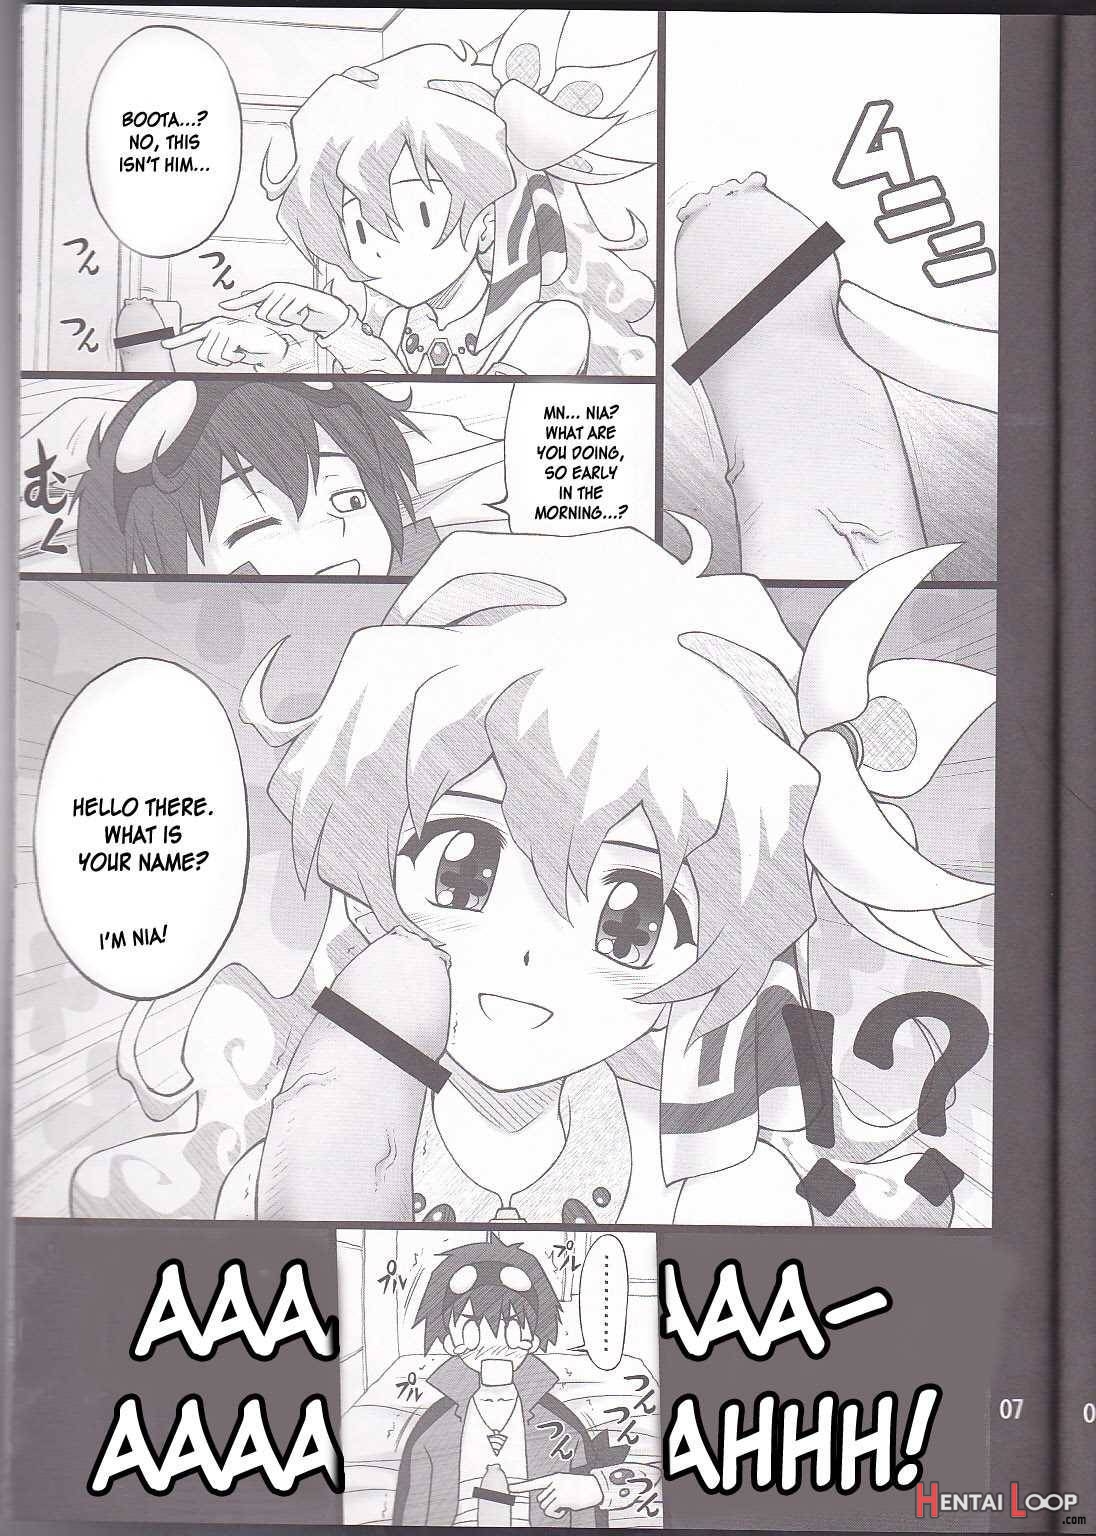 Oikari Nia-chan page 6